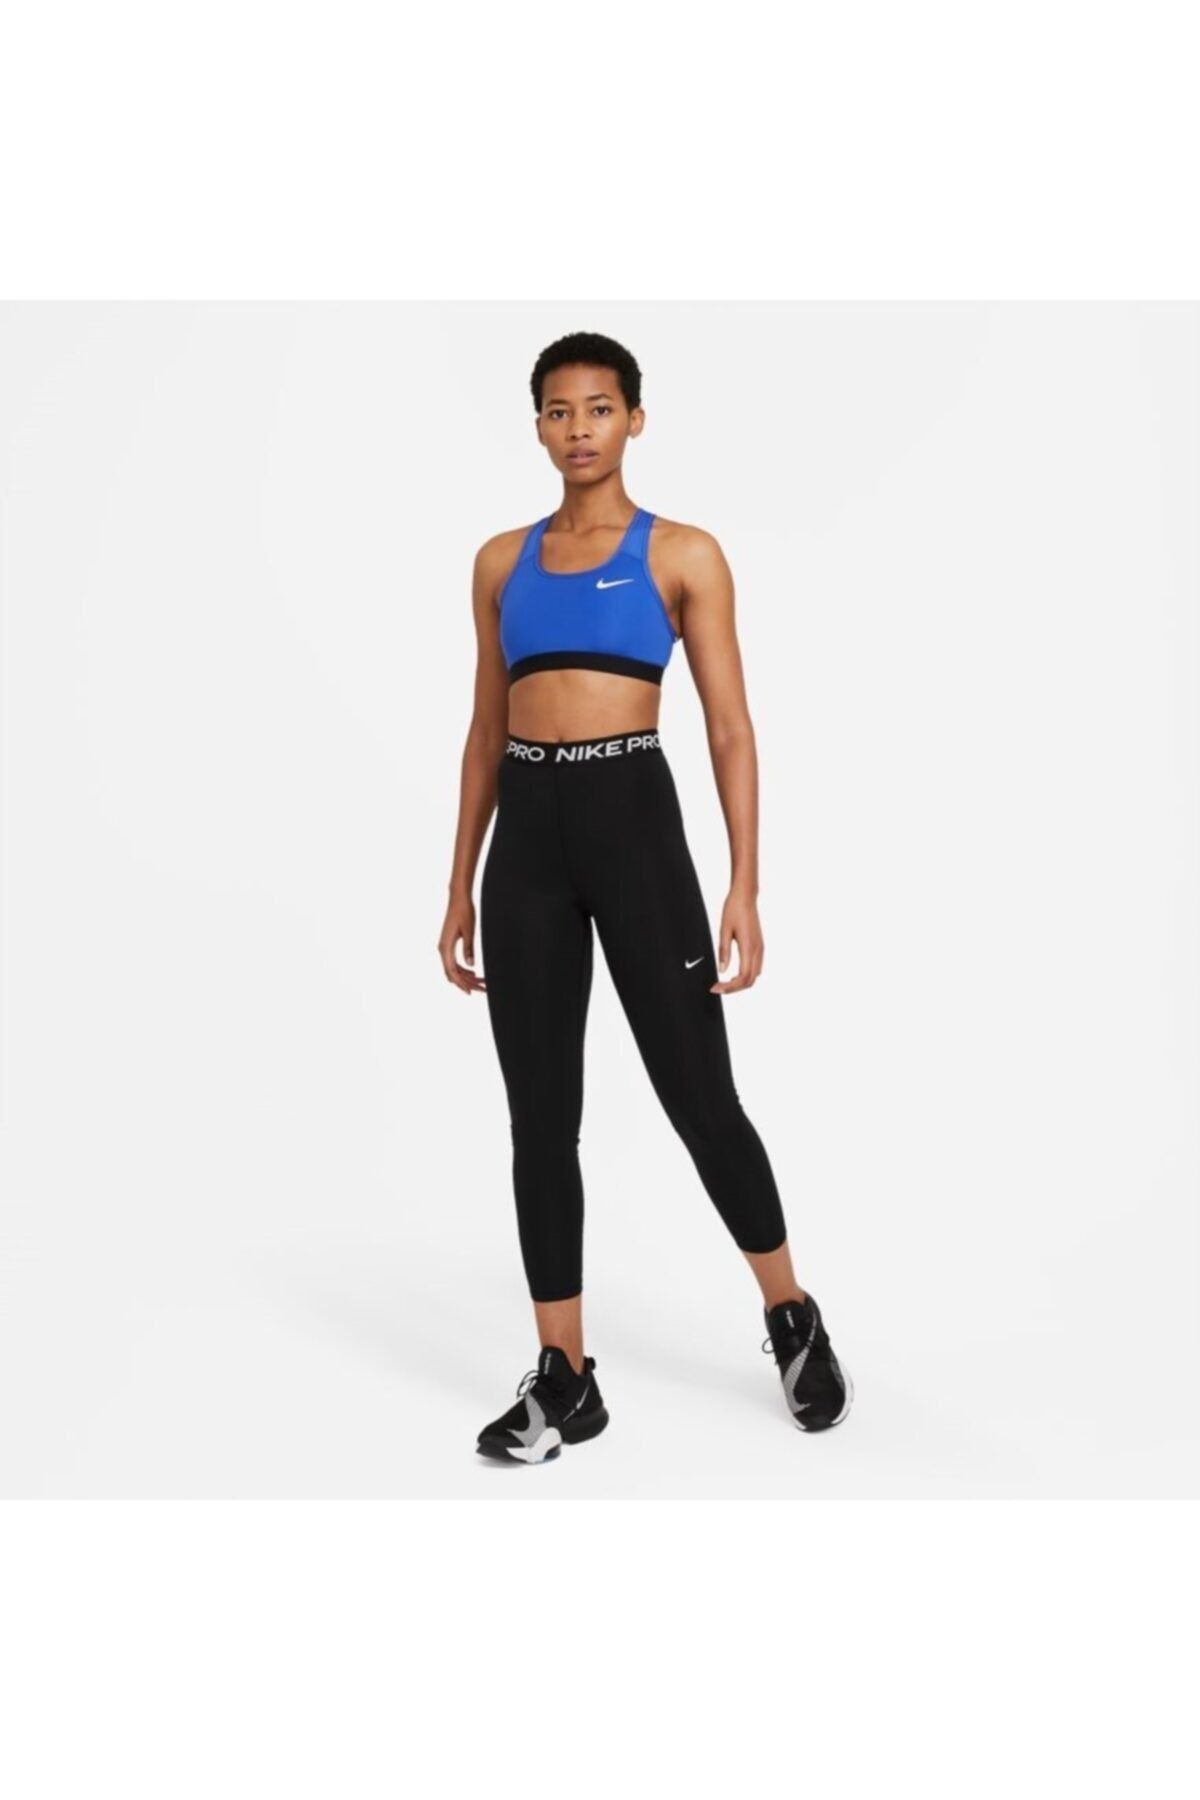 Nike Pro 365 Women's Tights